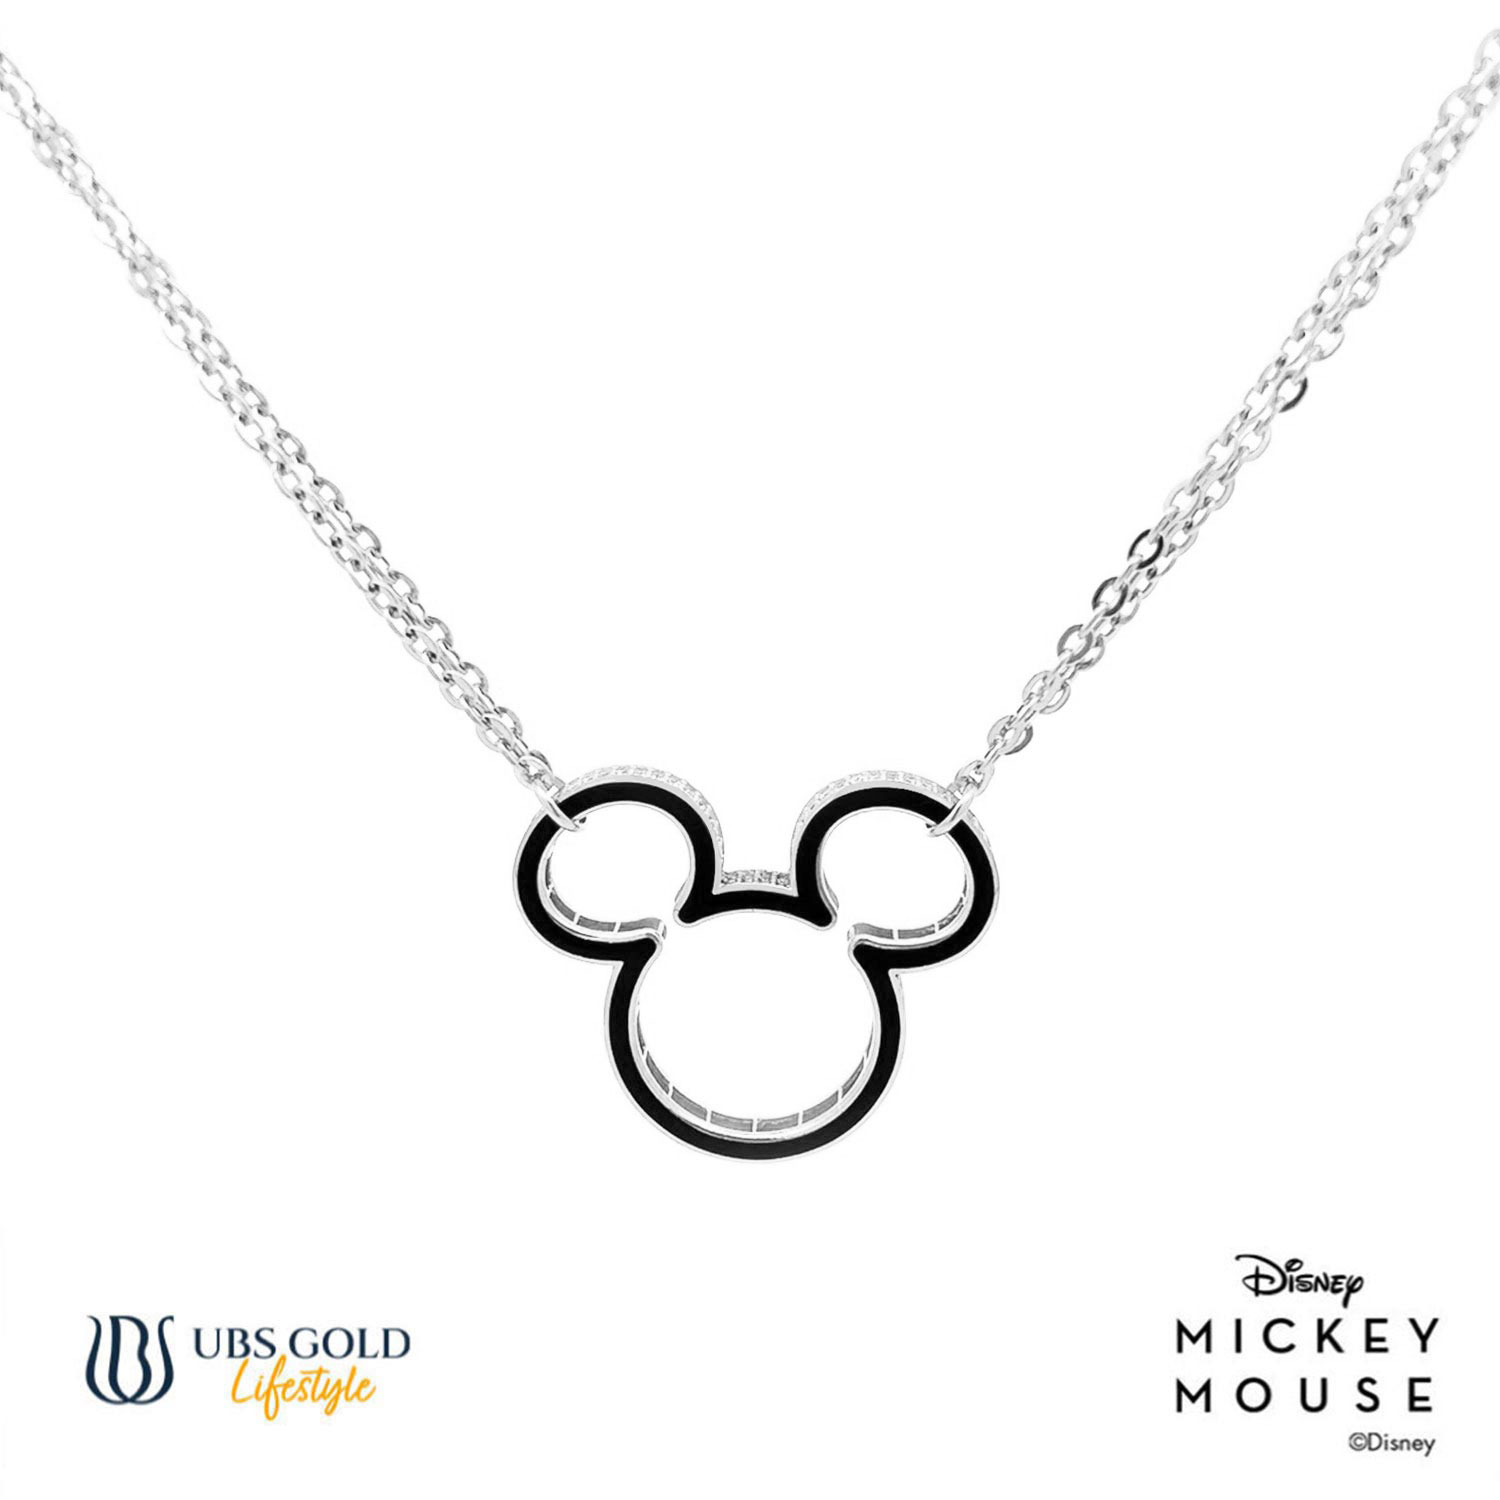 UBS Gold Kalung Emas Disney Mickey Mouse - HKY0211 - 17K